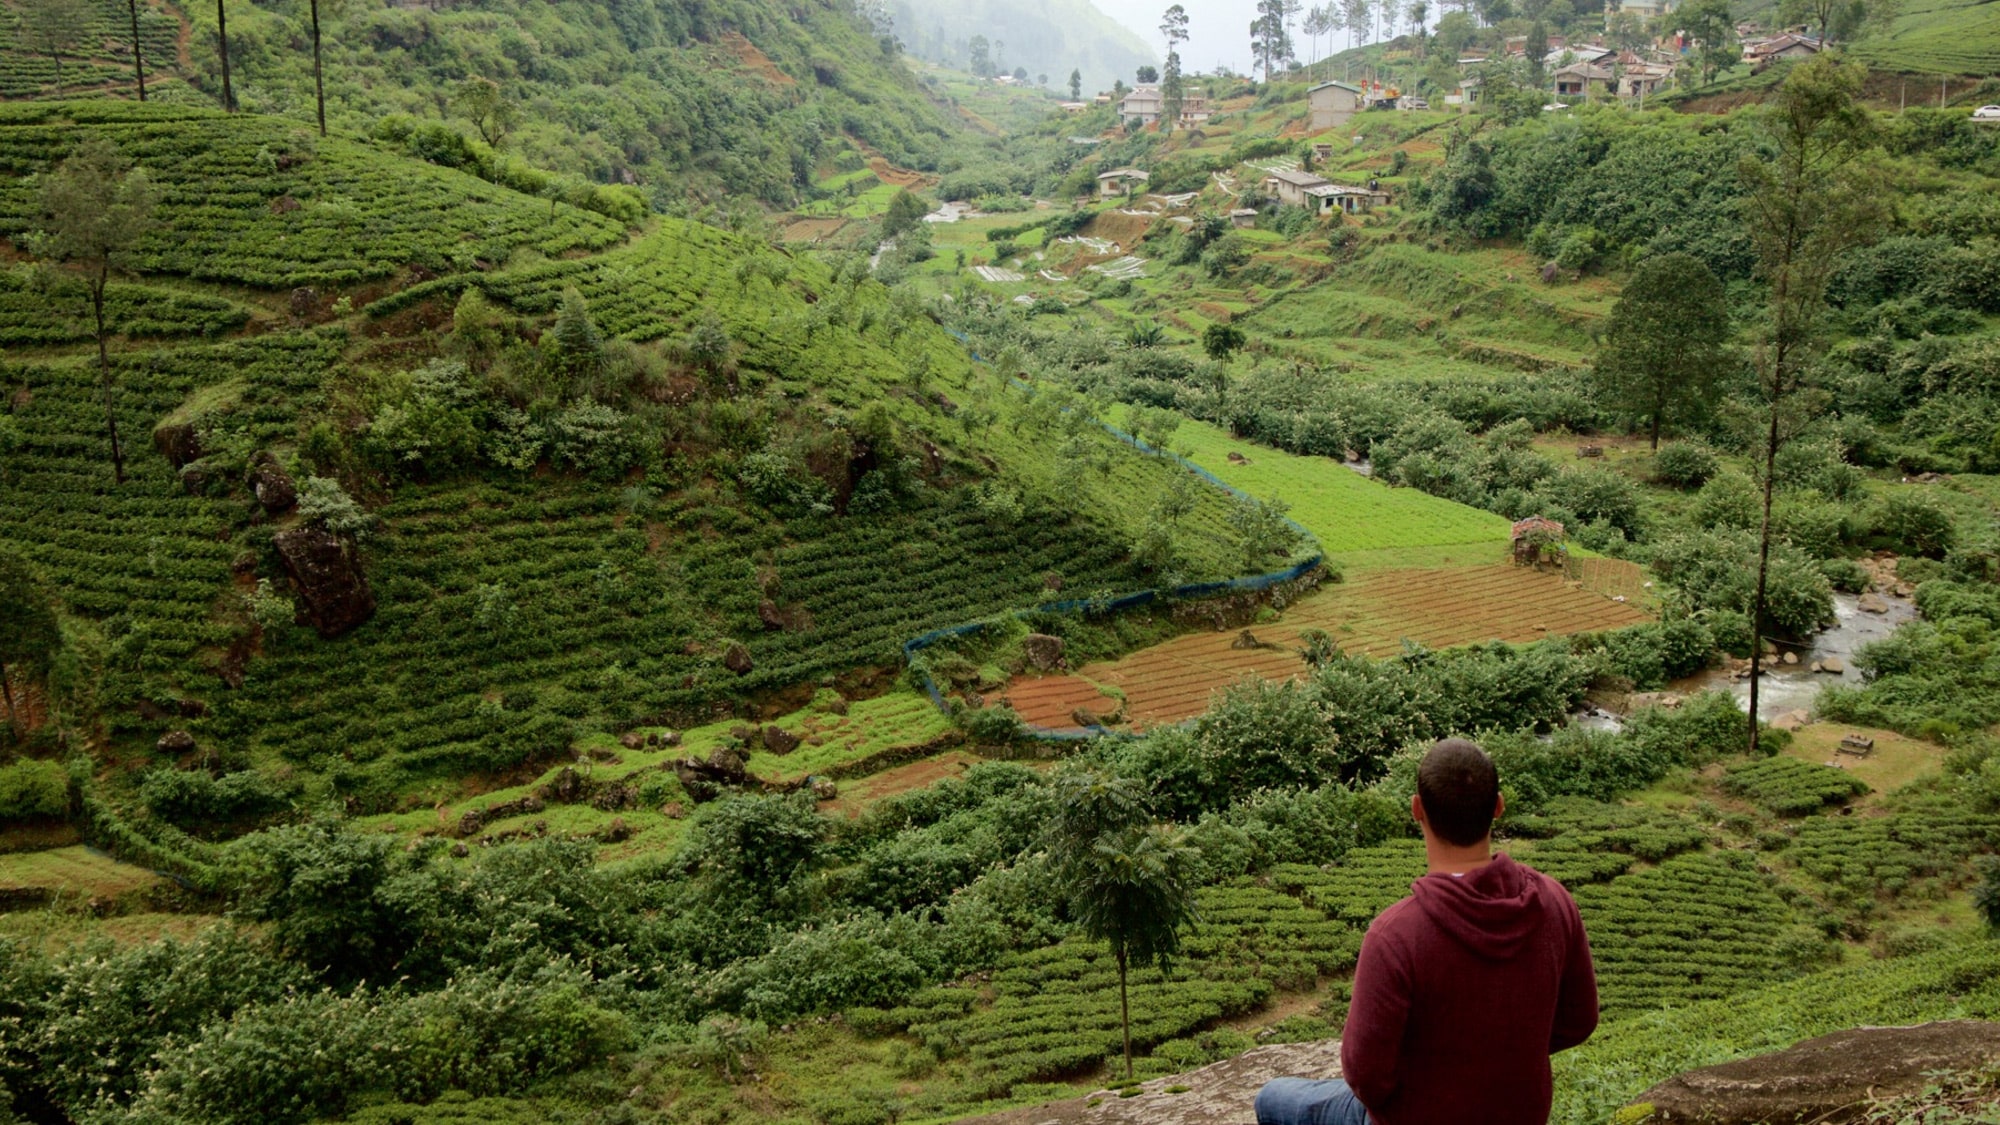 Tea fields in Sri Lanka's lush interior